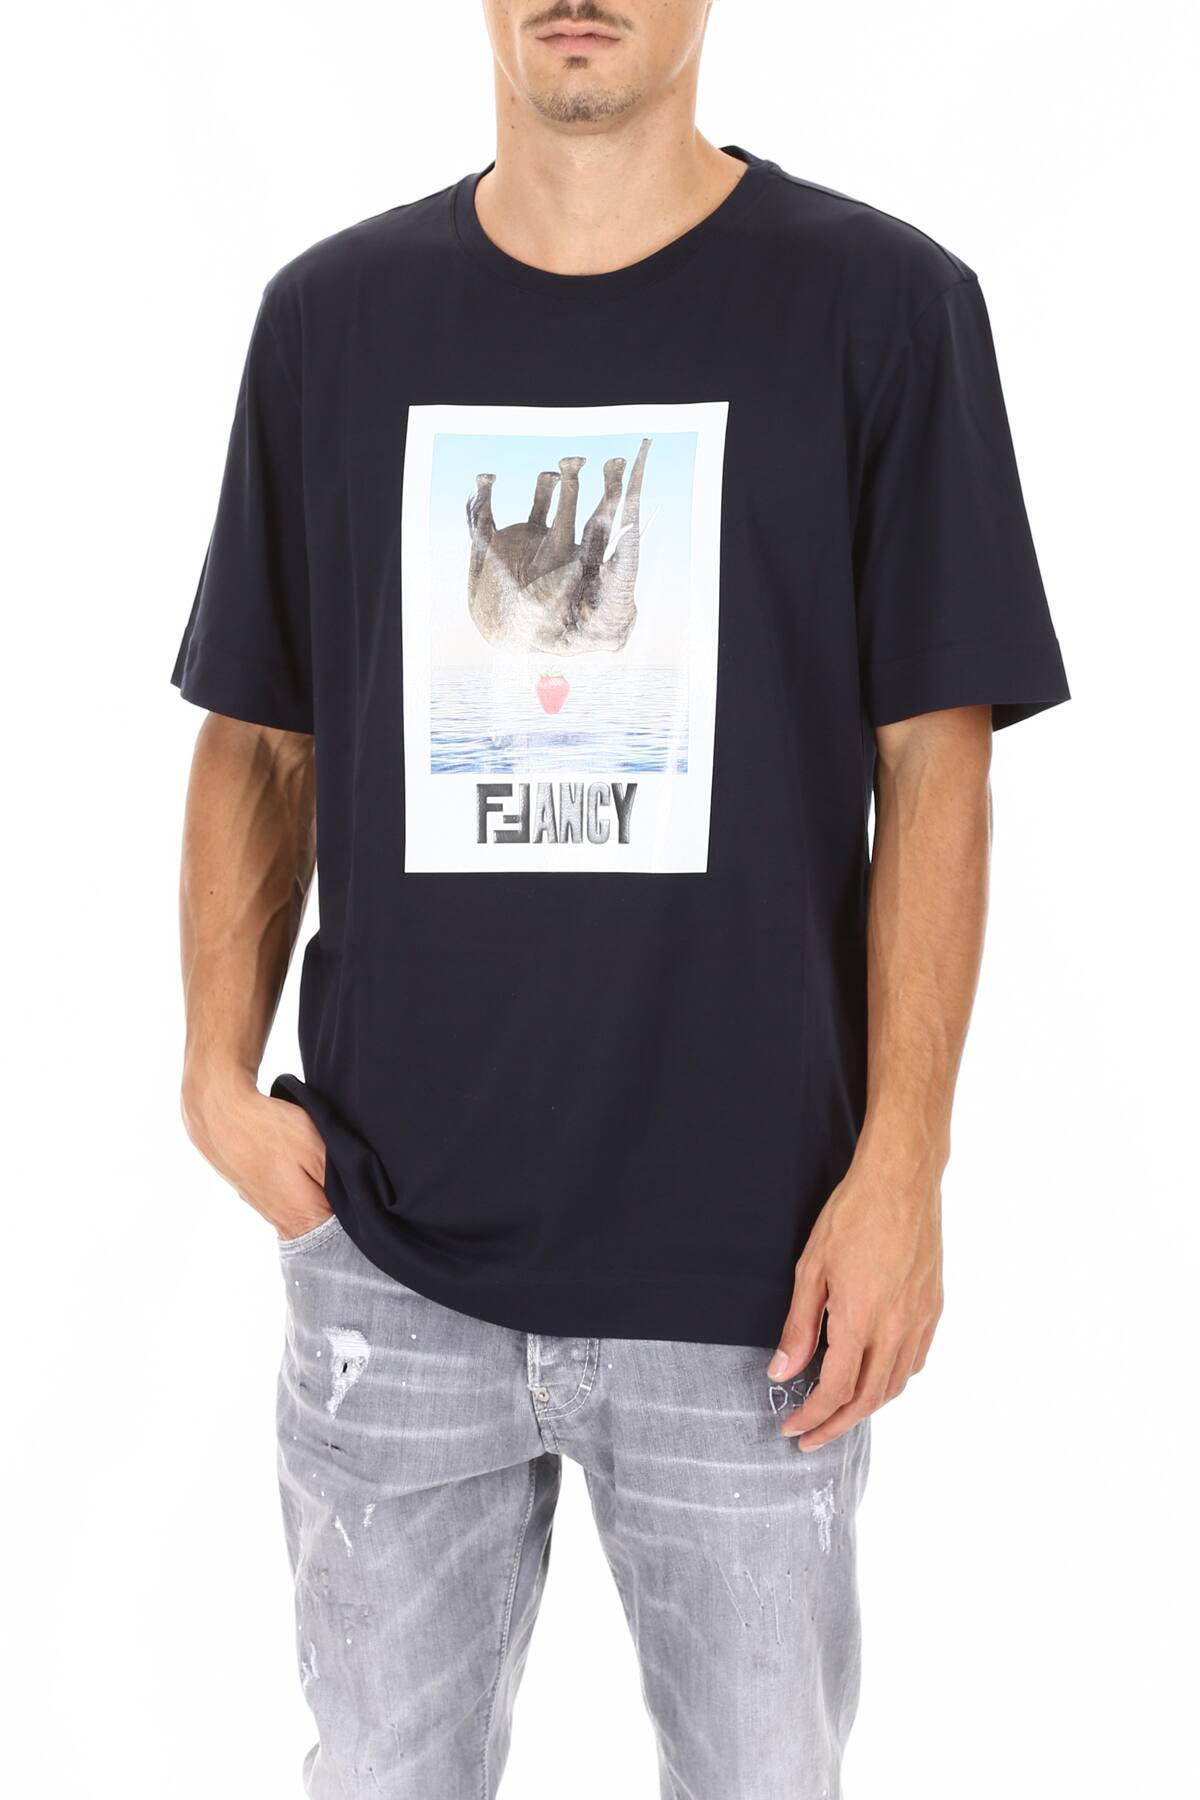 Fendi Fancy Graphic T-shirt in Navy (Blue) for Men - Lyst